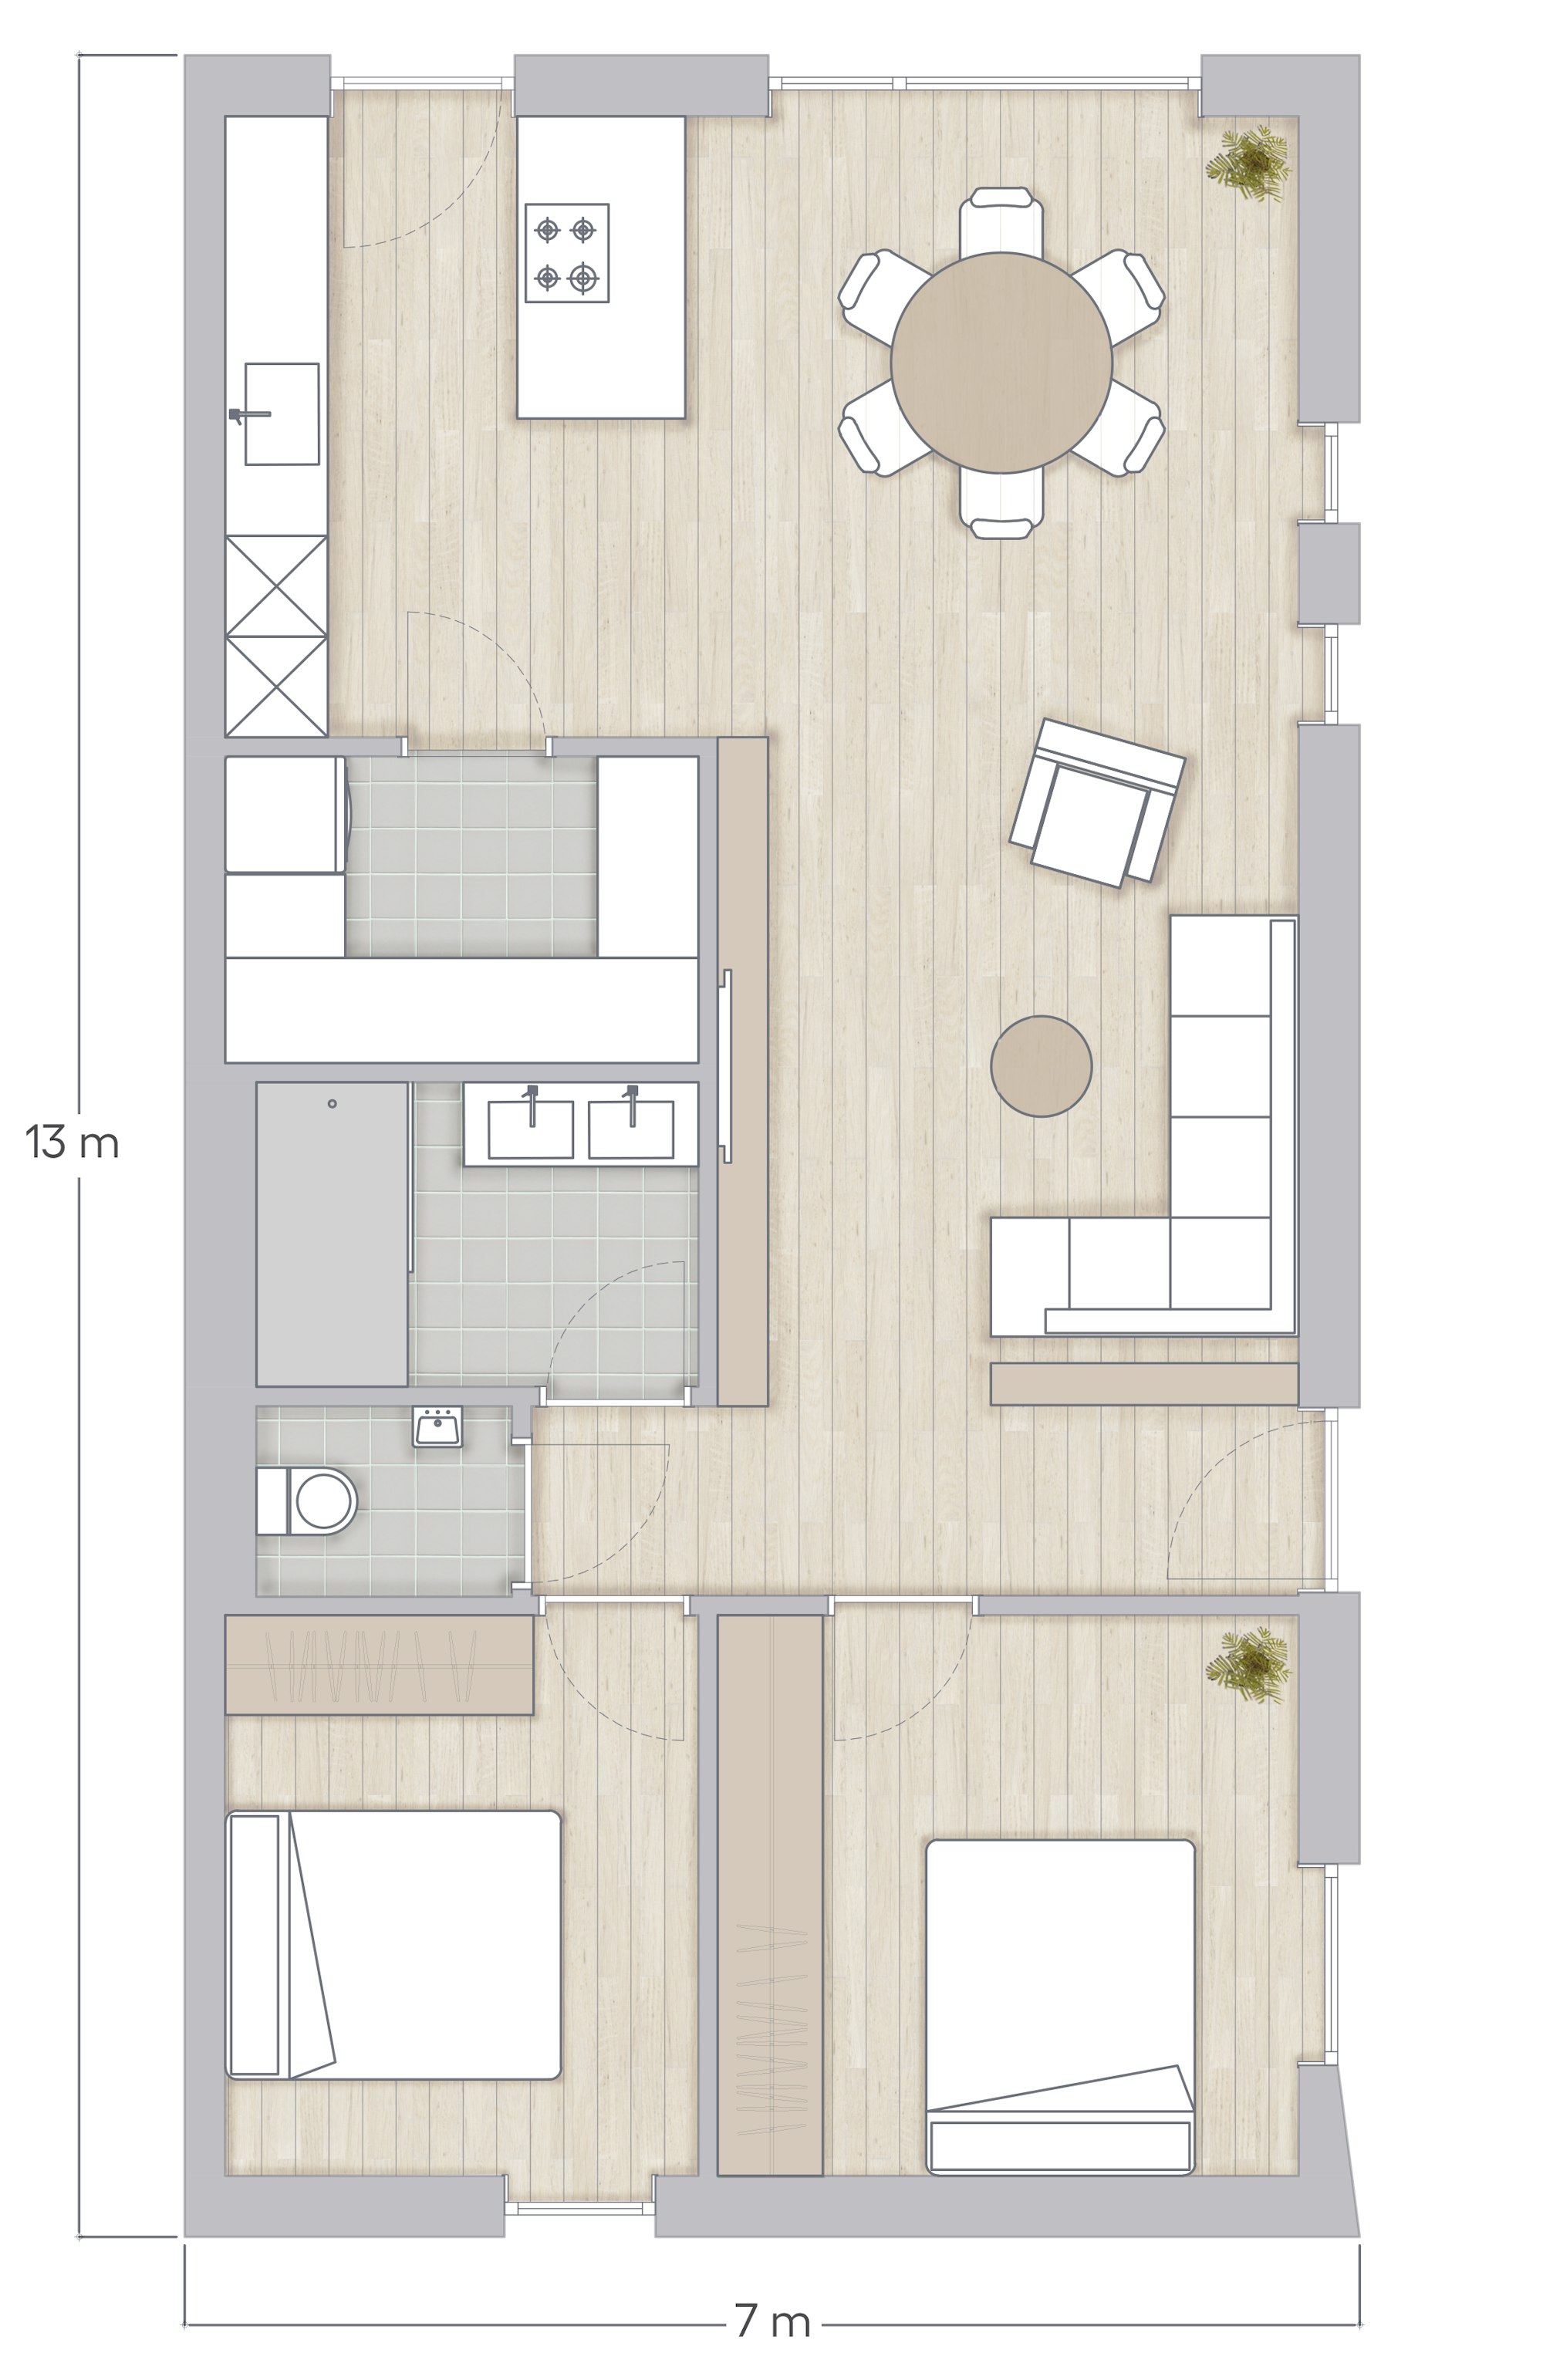 Plan Skilpod #90, 2 slaapkamers gelijkvloers bungalow woning